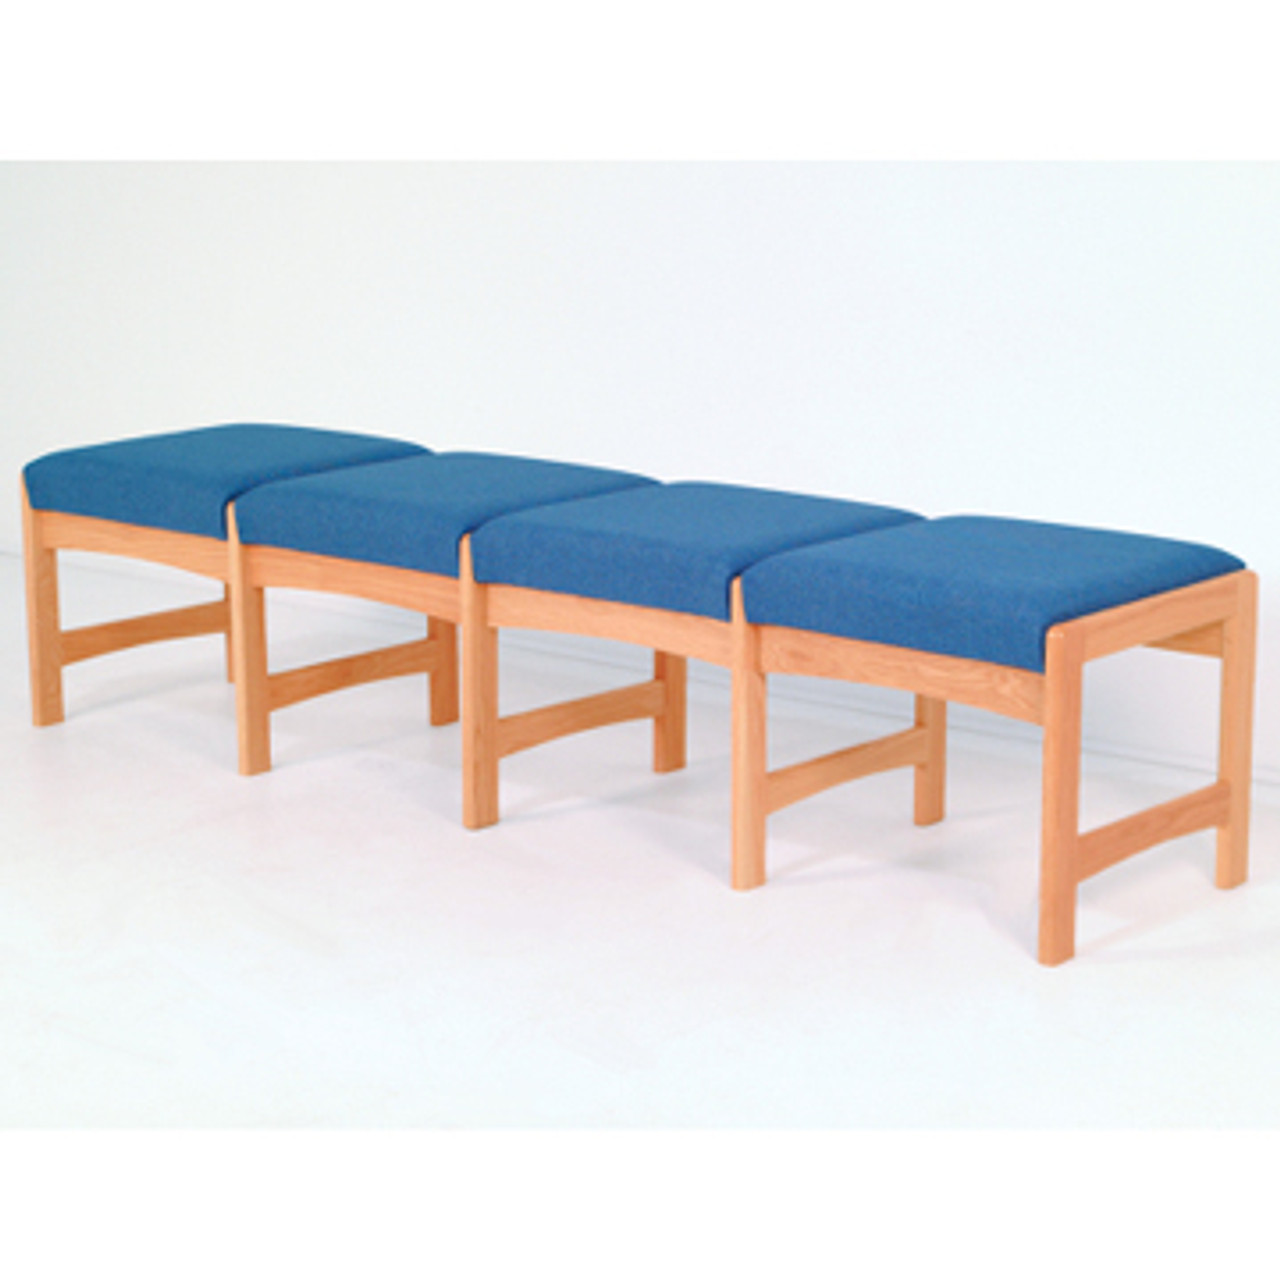 Wooden Mallet Dakota Wave Four Seat Bench, Watercolor Blue, Light Oak